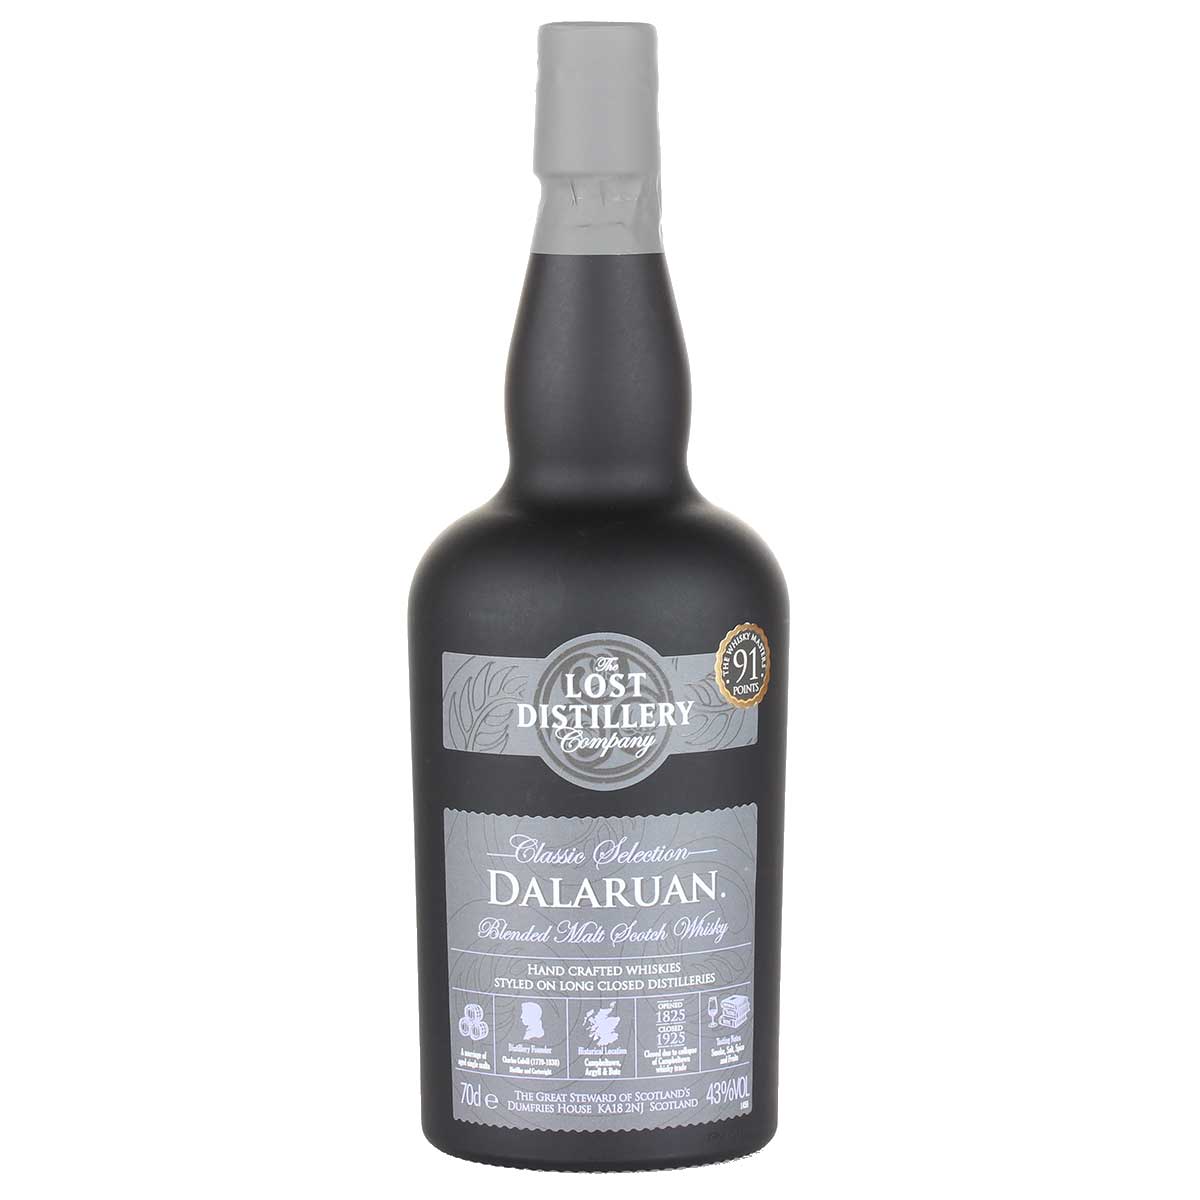 The Lost Distillery Dalaruan. Scotch Whisky 43% vol. 0,7l in Geschenkdose